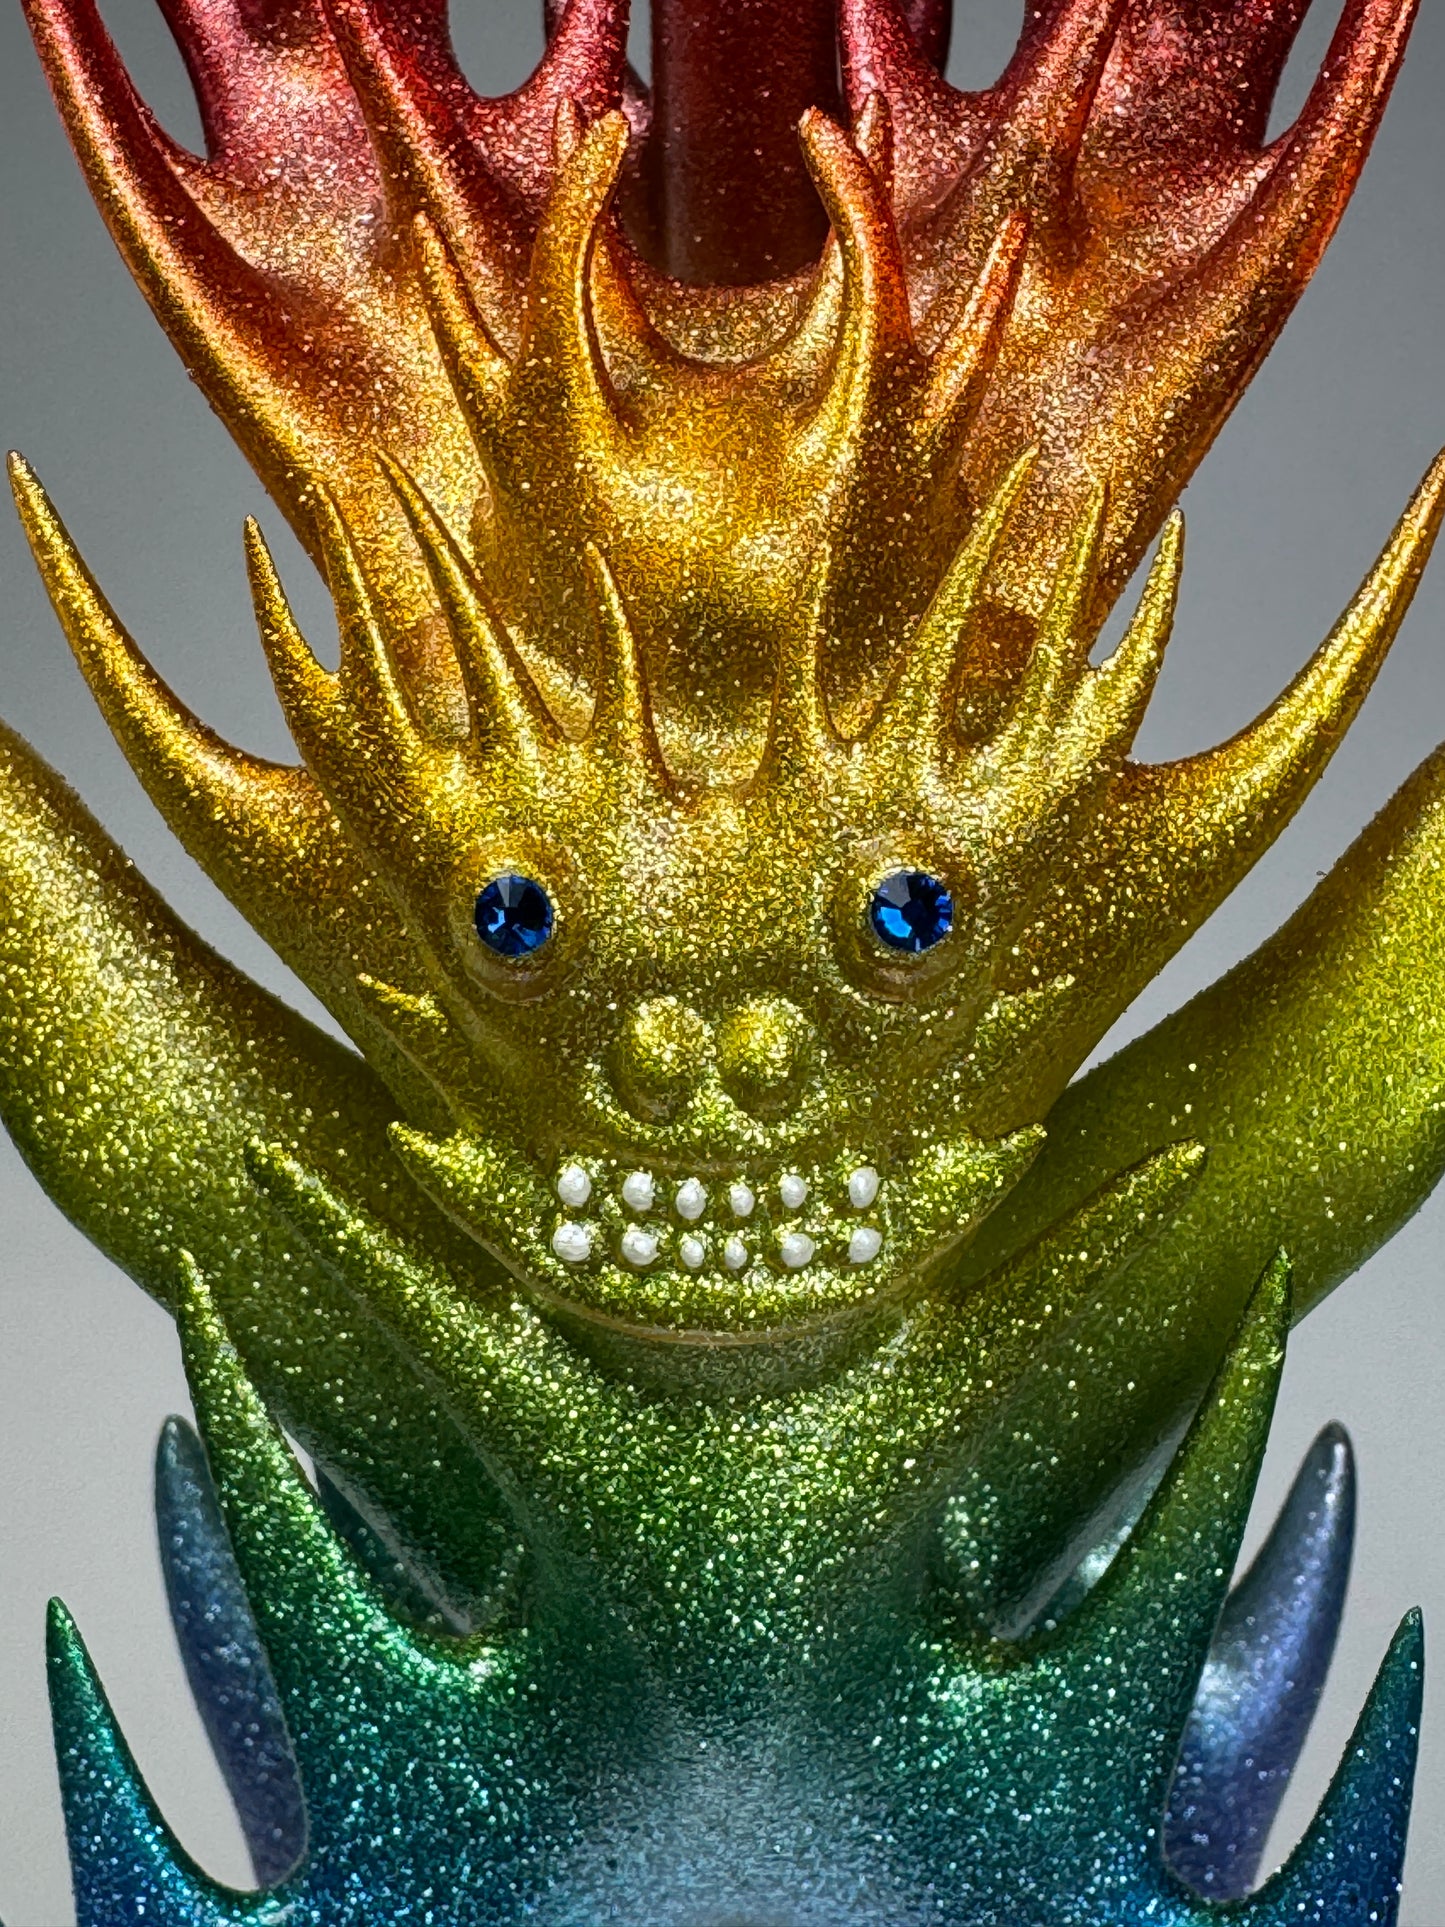 Antler Beast Glyph: Metal Flaked Rainbow